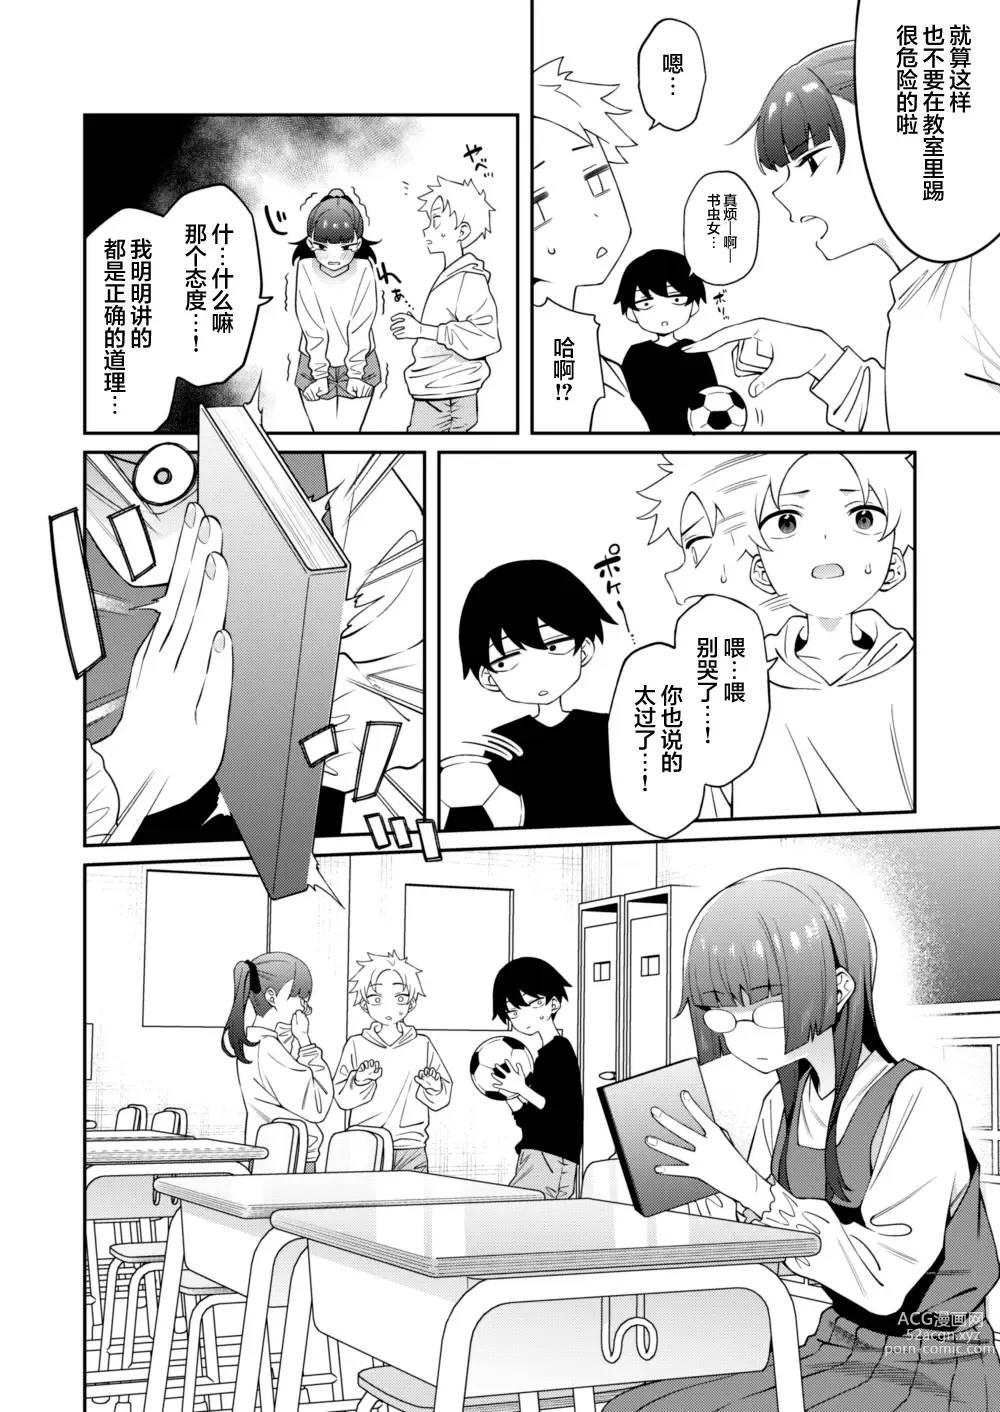 Page 3 of doujinshi Sumire-chan ha atama ga ii.